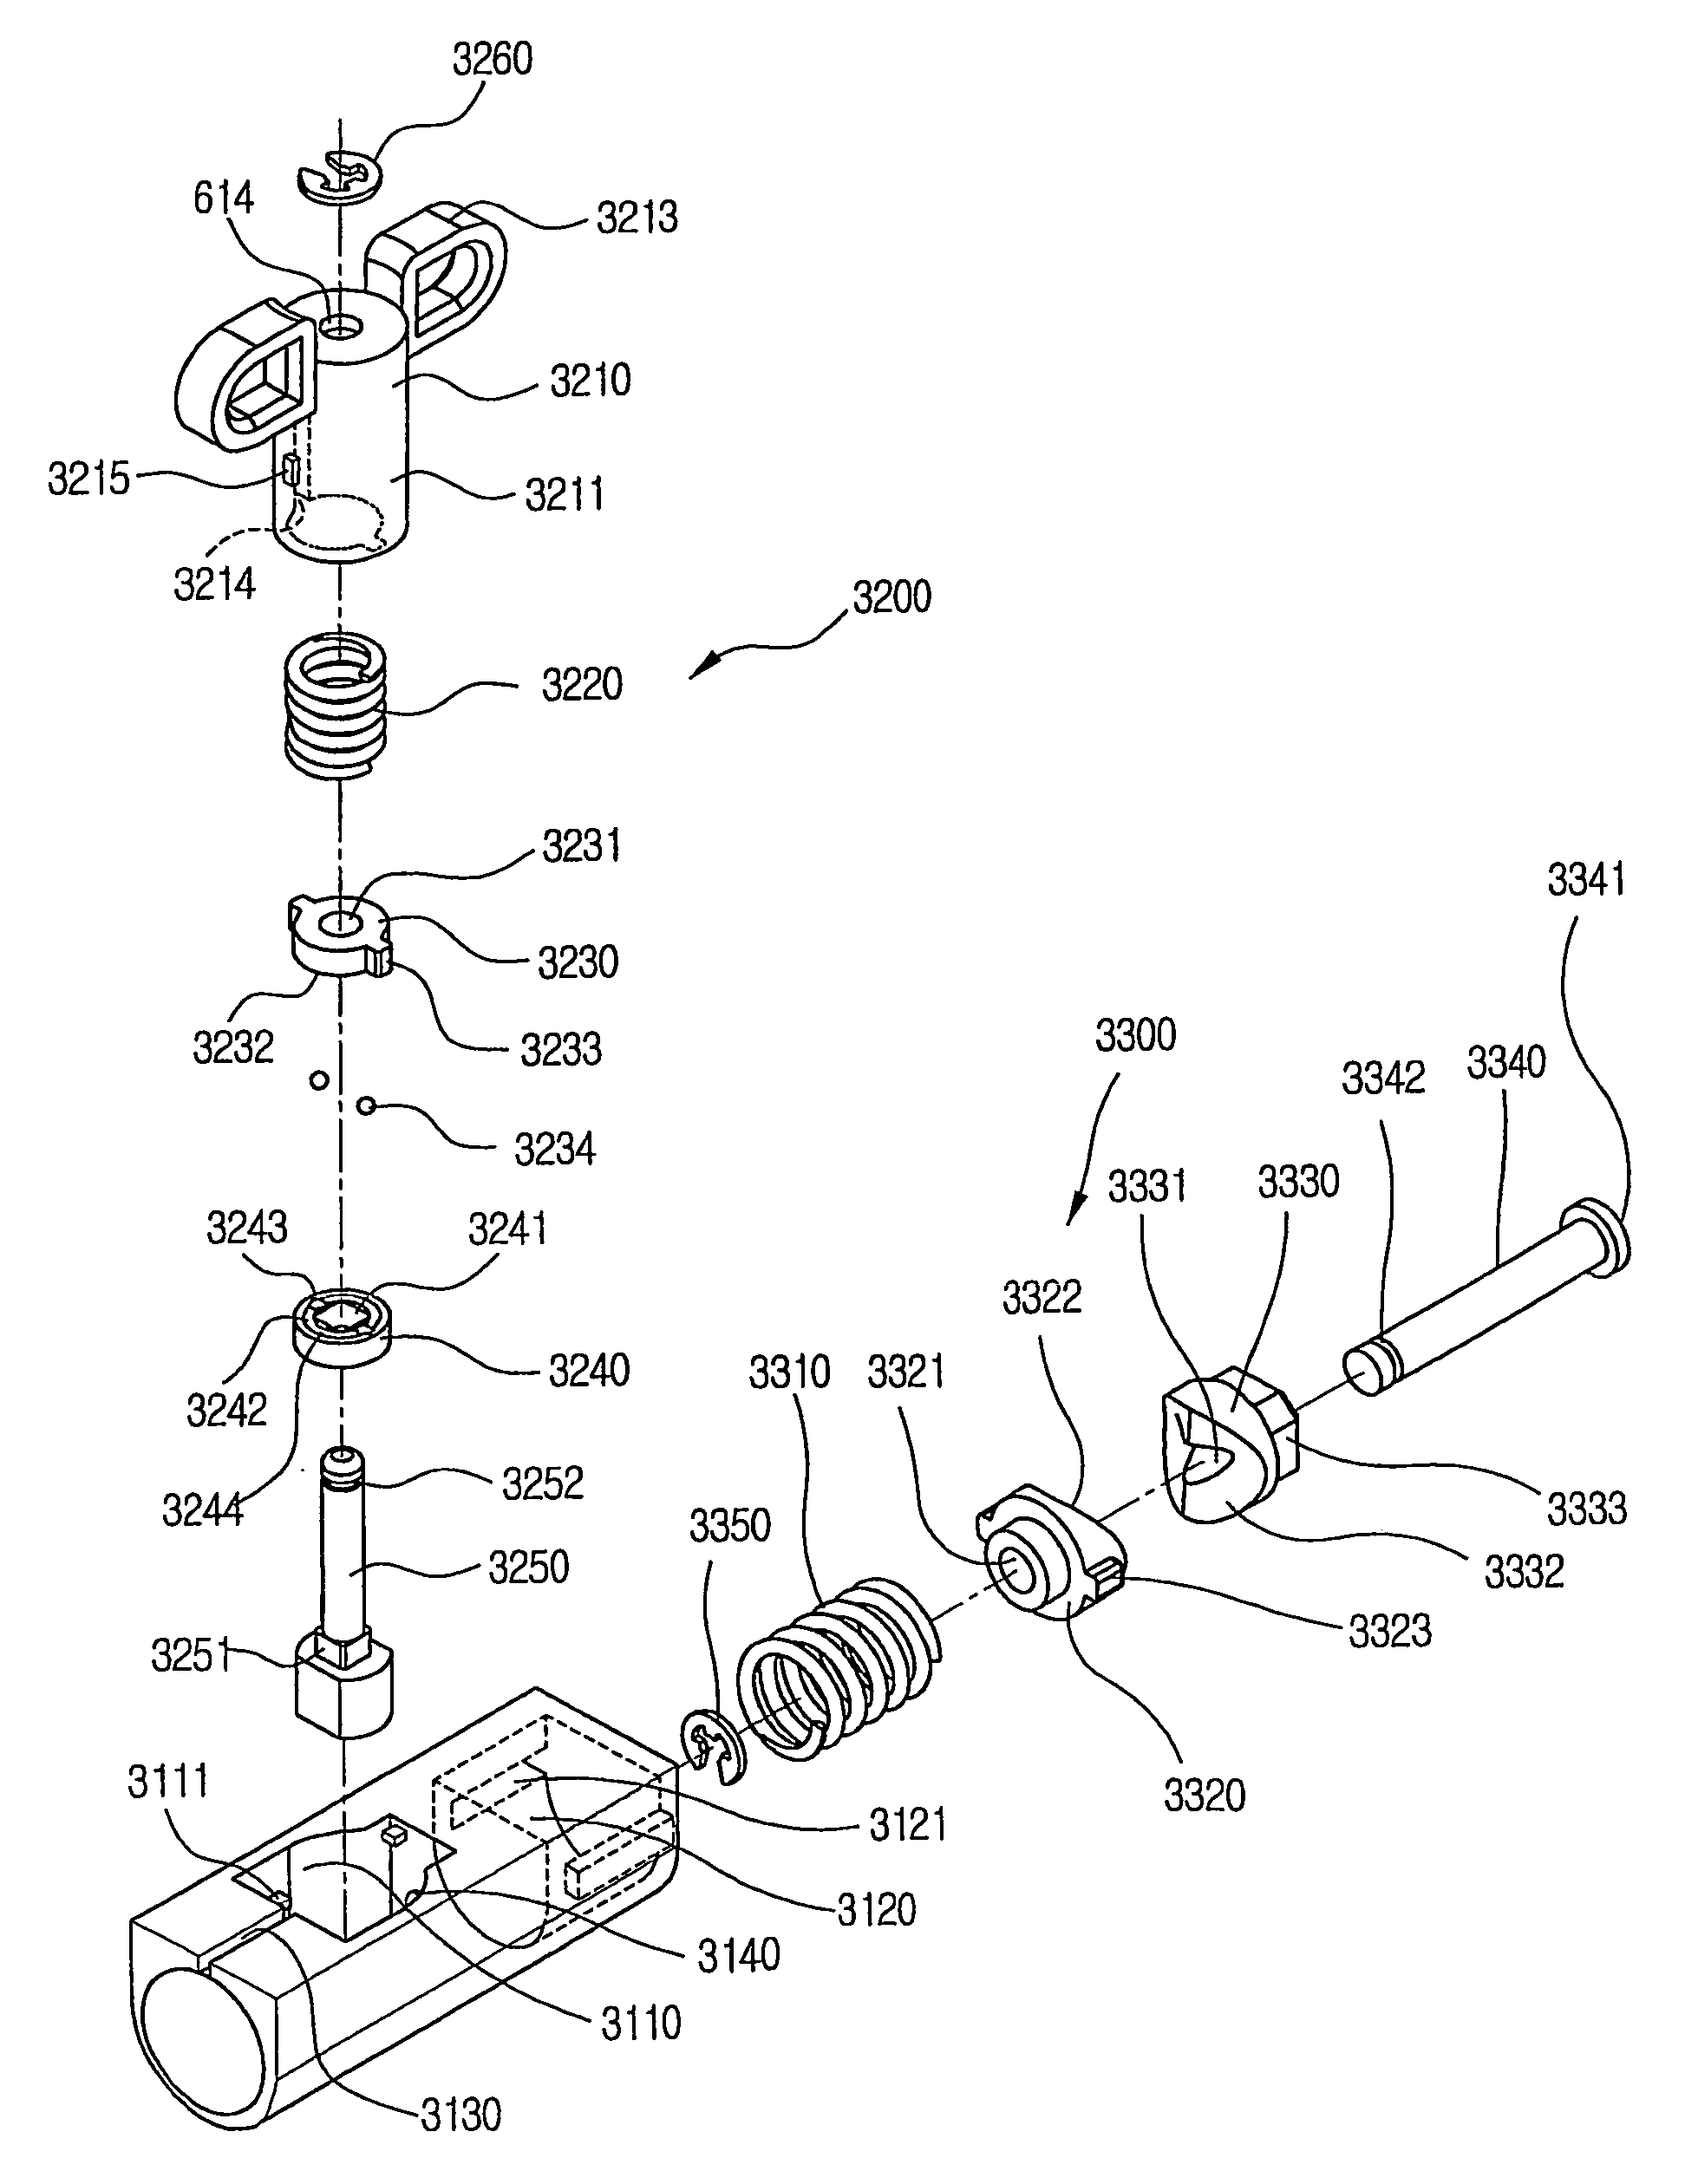 Rotary hinge mechanism of portable phone